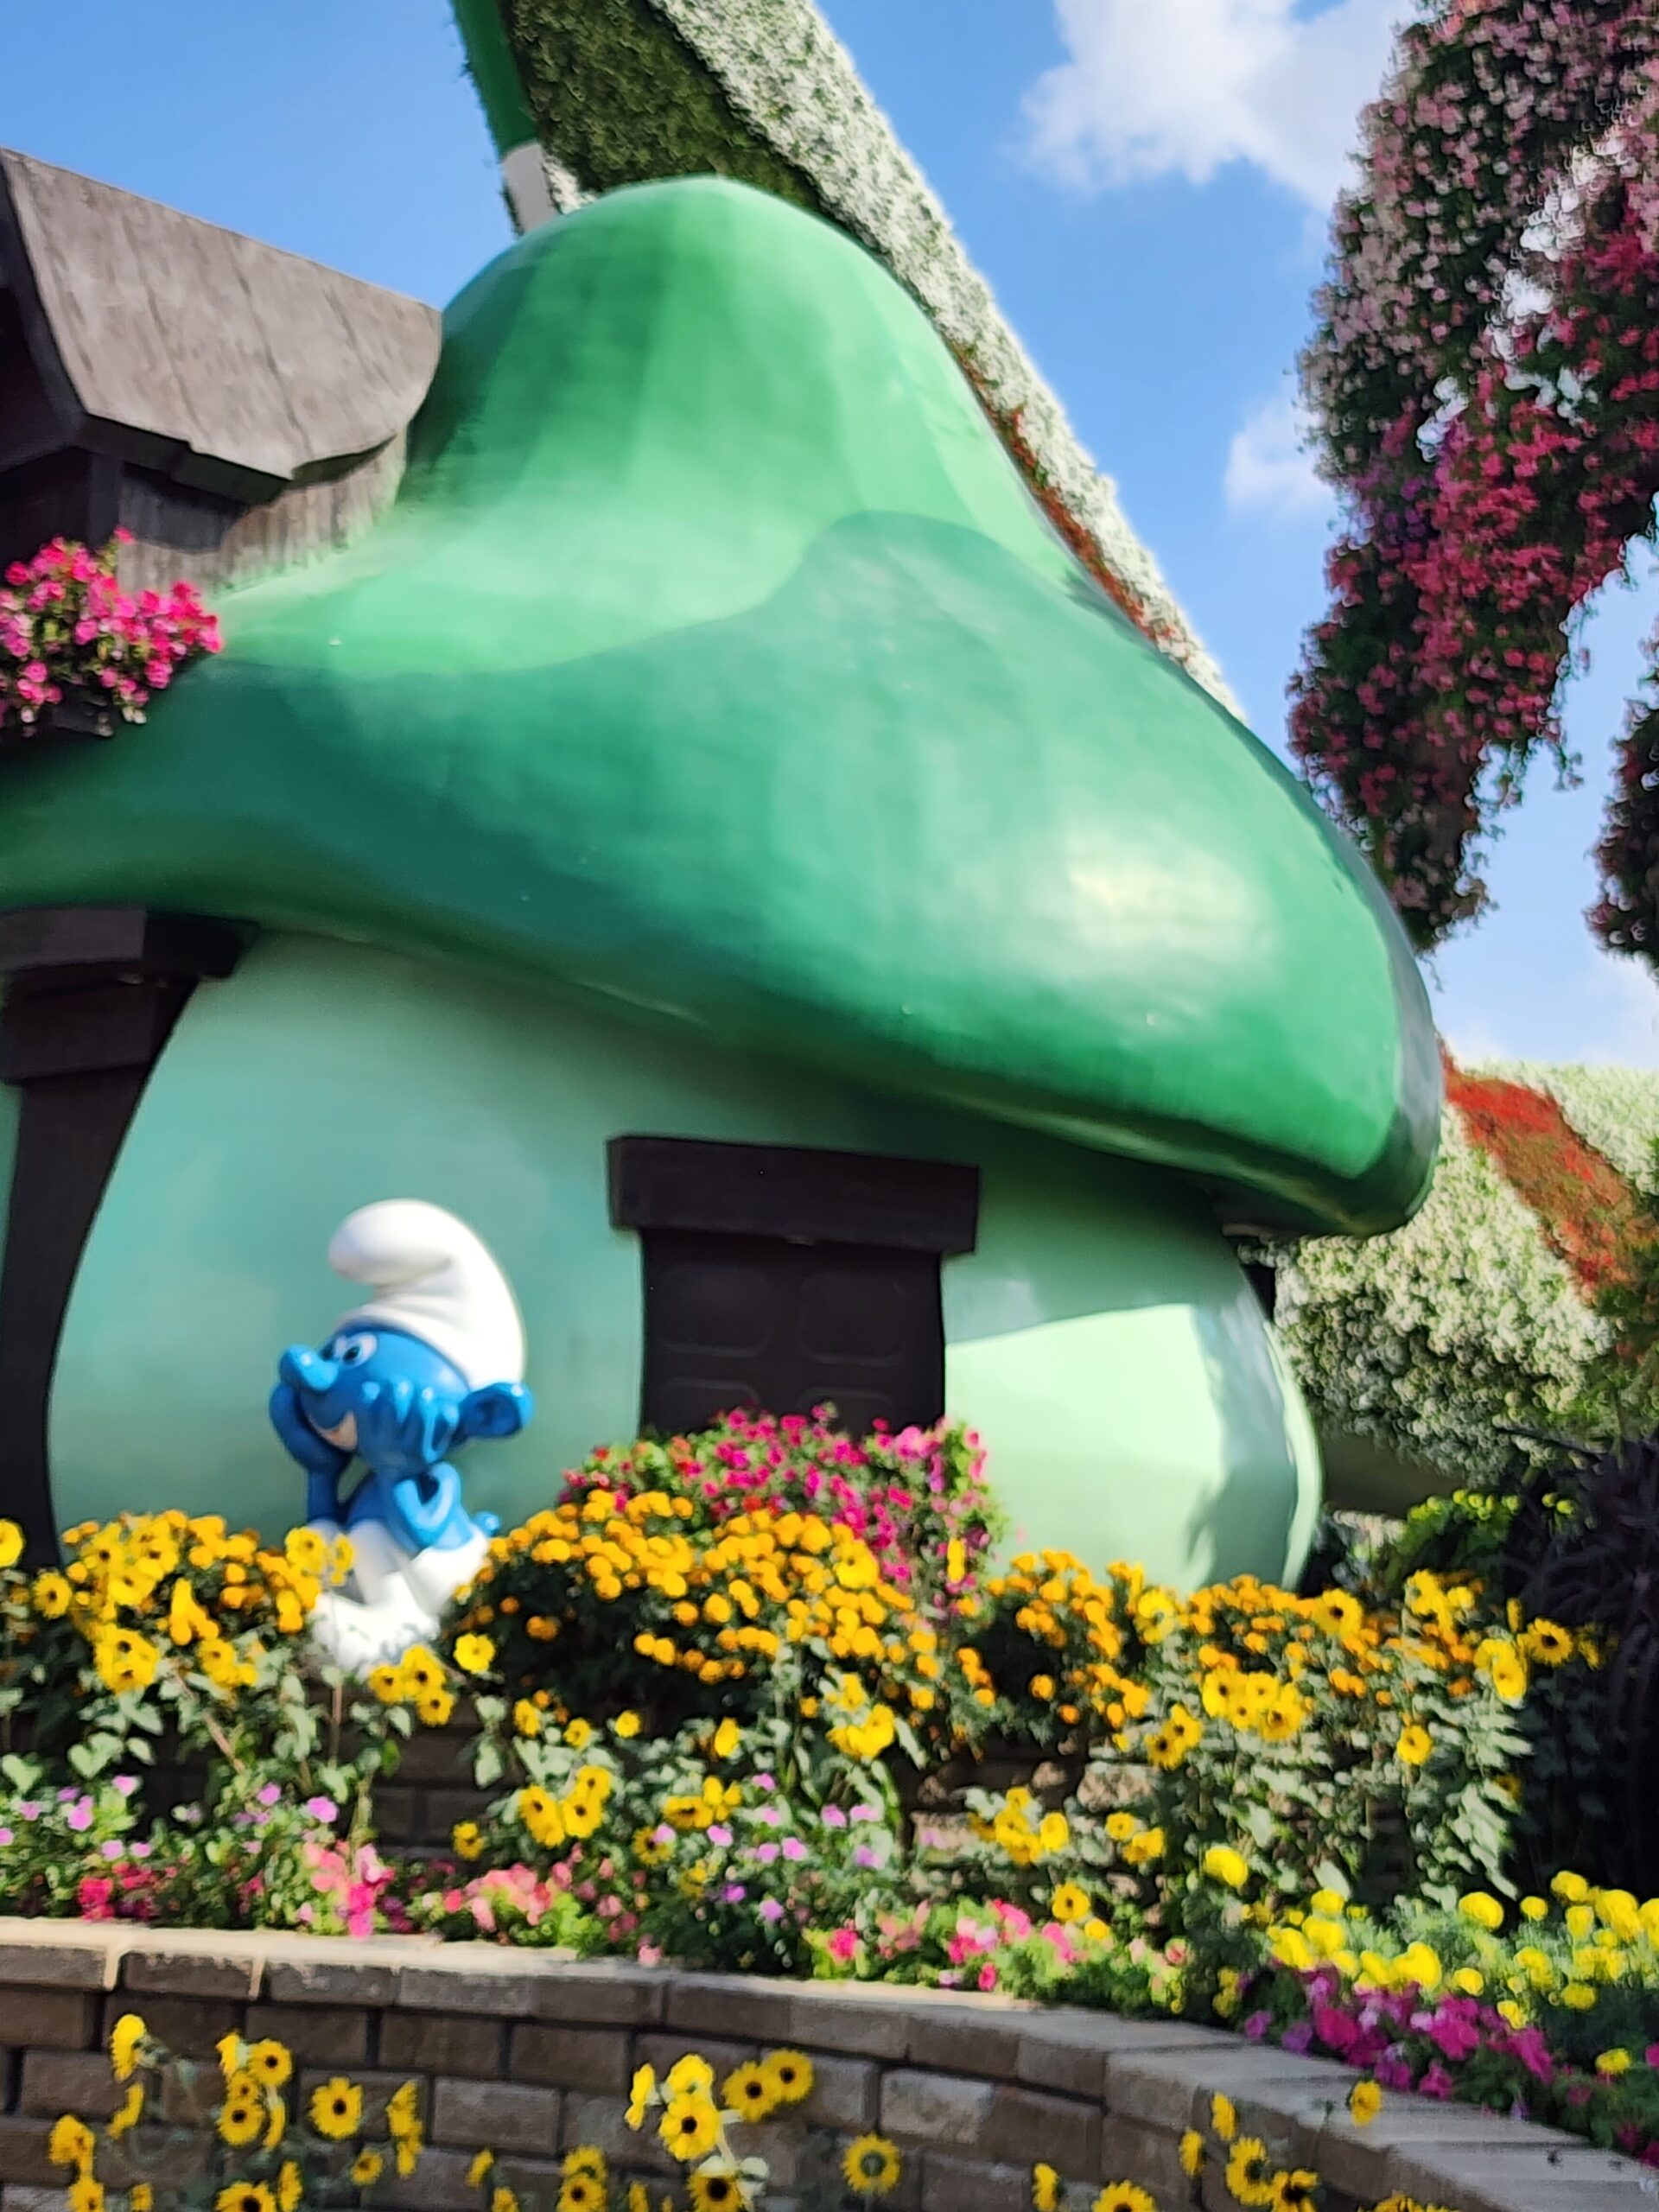 The Smurfs Village, Dubai Miracle Garden 